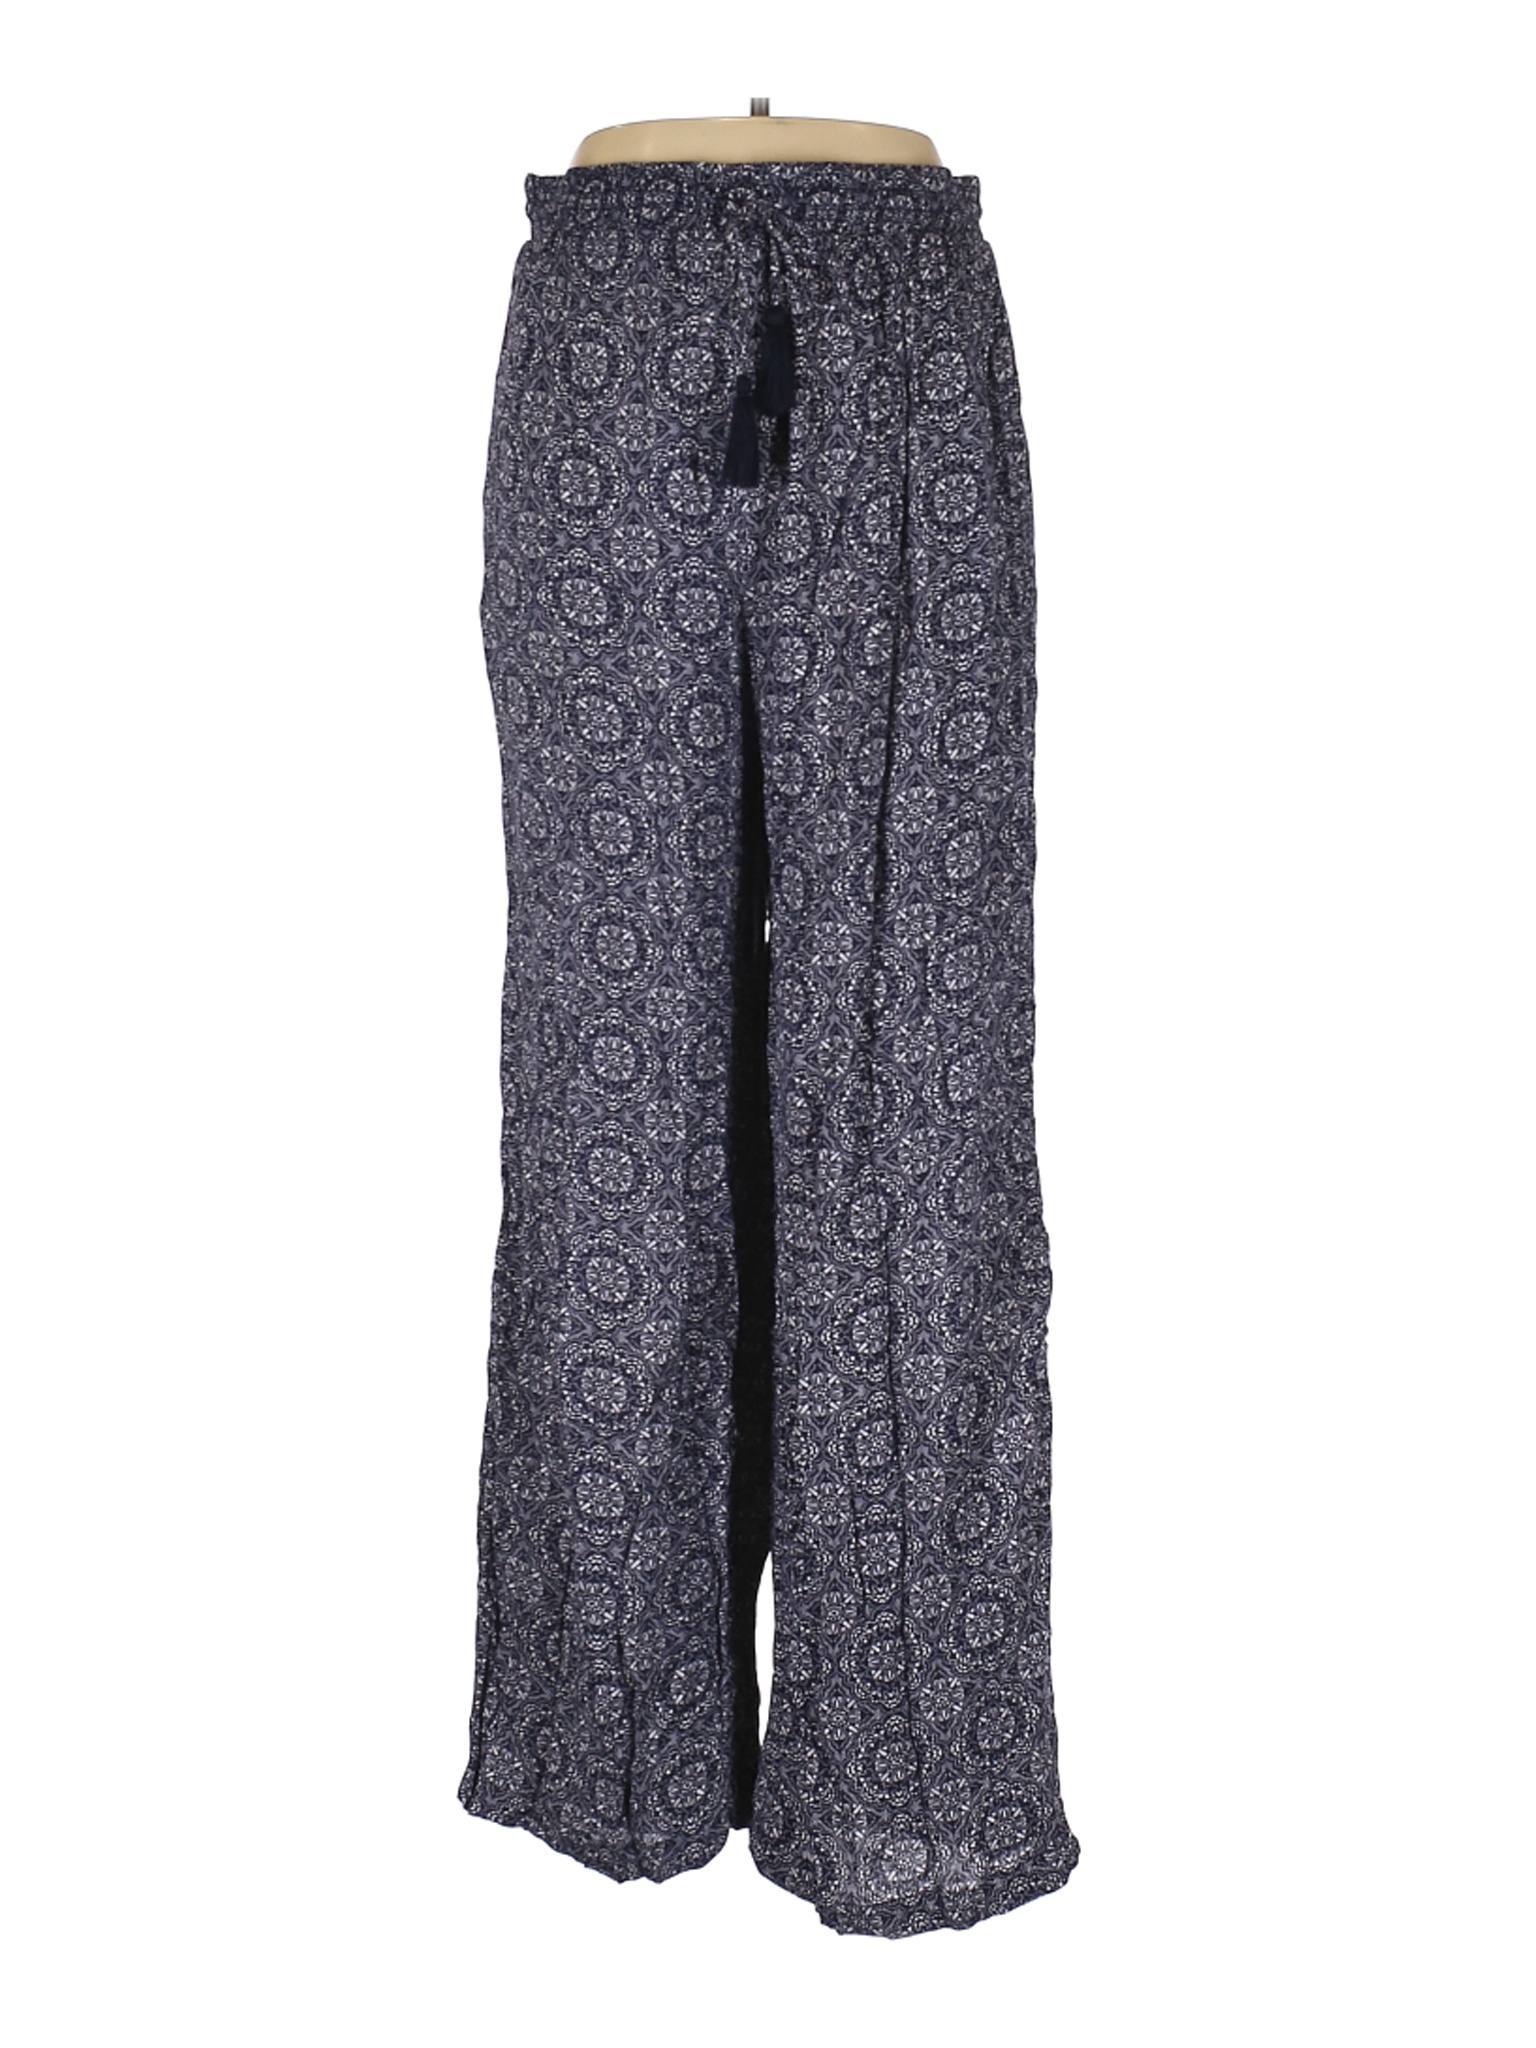 Knox Rose Women Blue Casual Pants L | eBay